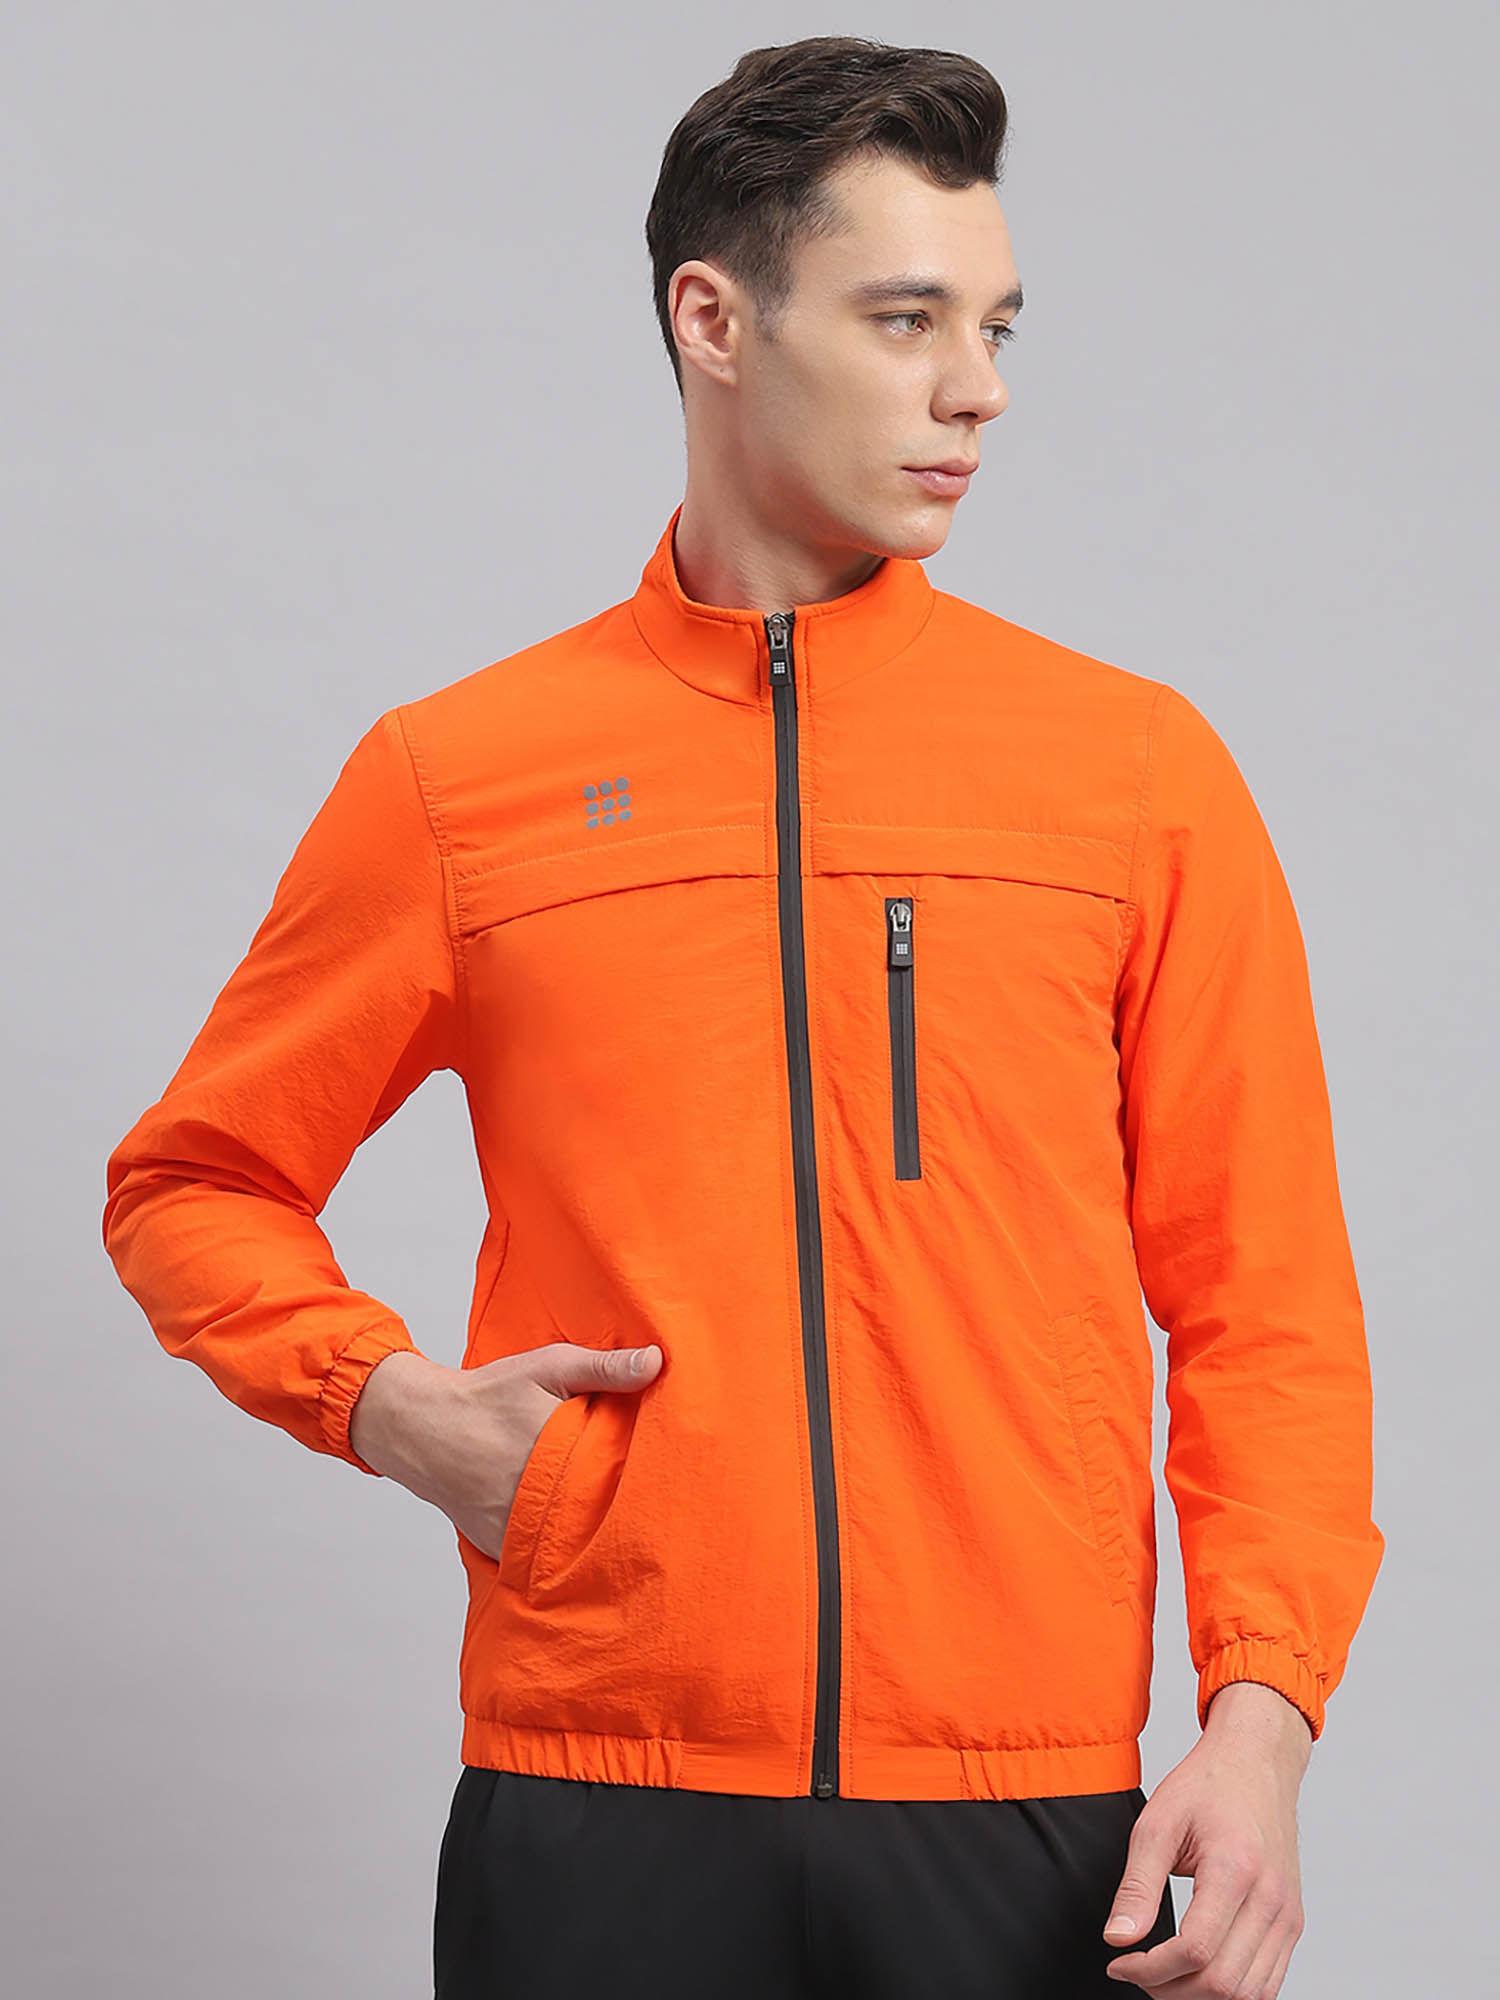 orange solid jacket